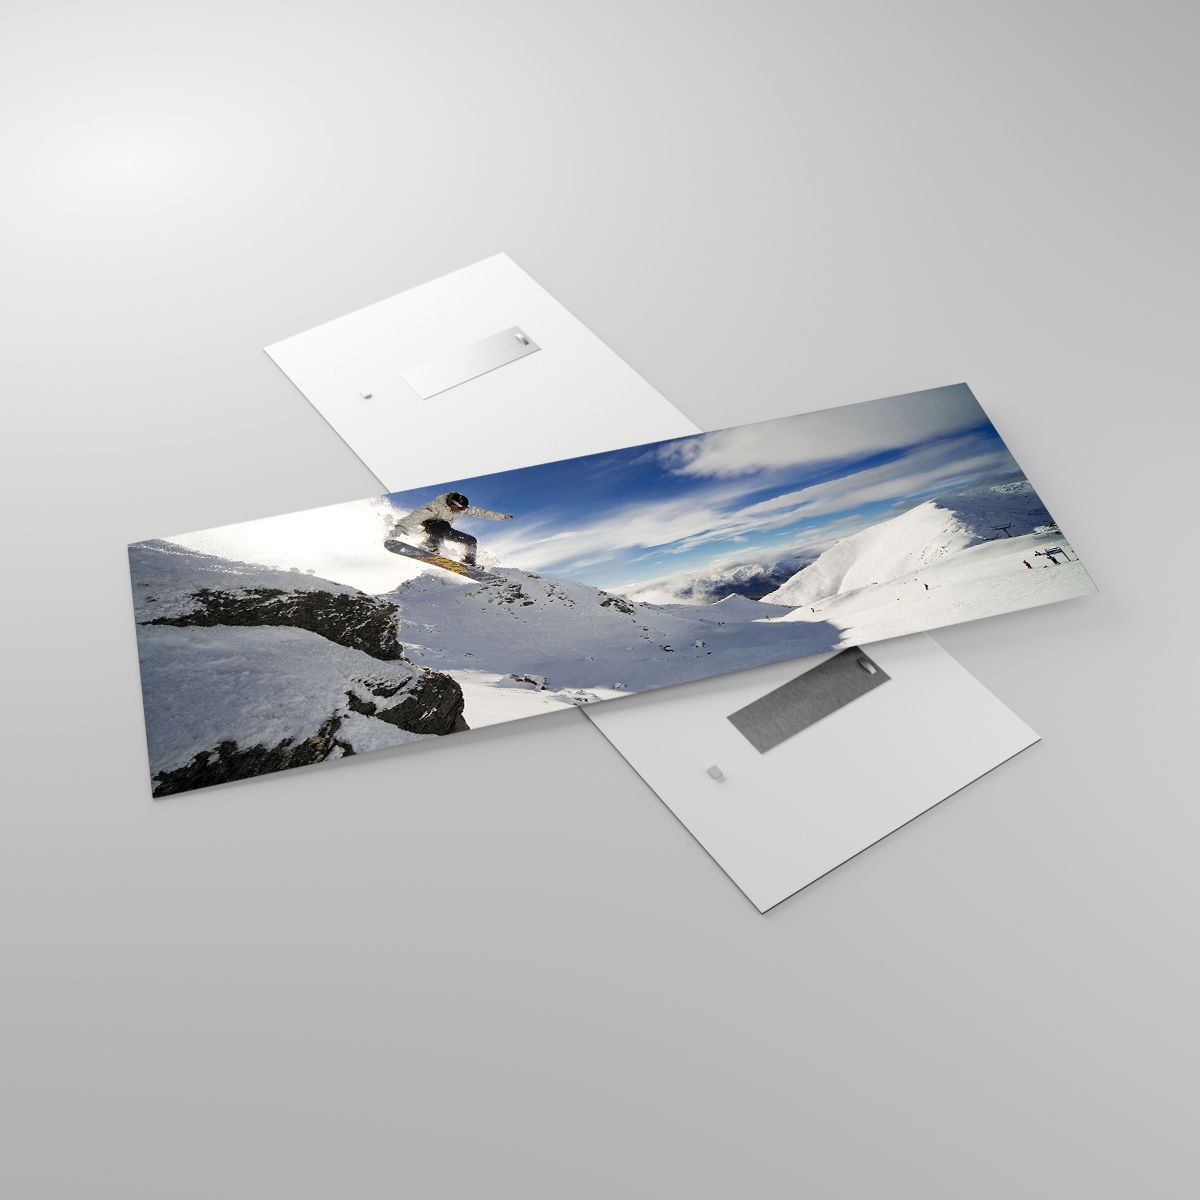 Glasbild Snowboard, Glasbild Landschaft, Glasbild Berge, Glasbild Schnee, Glasbild Sport